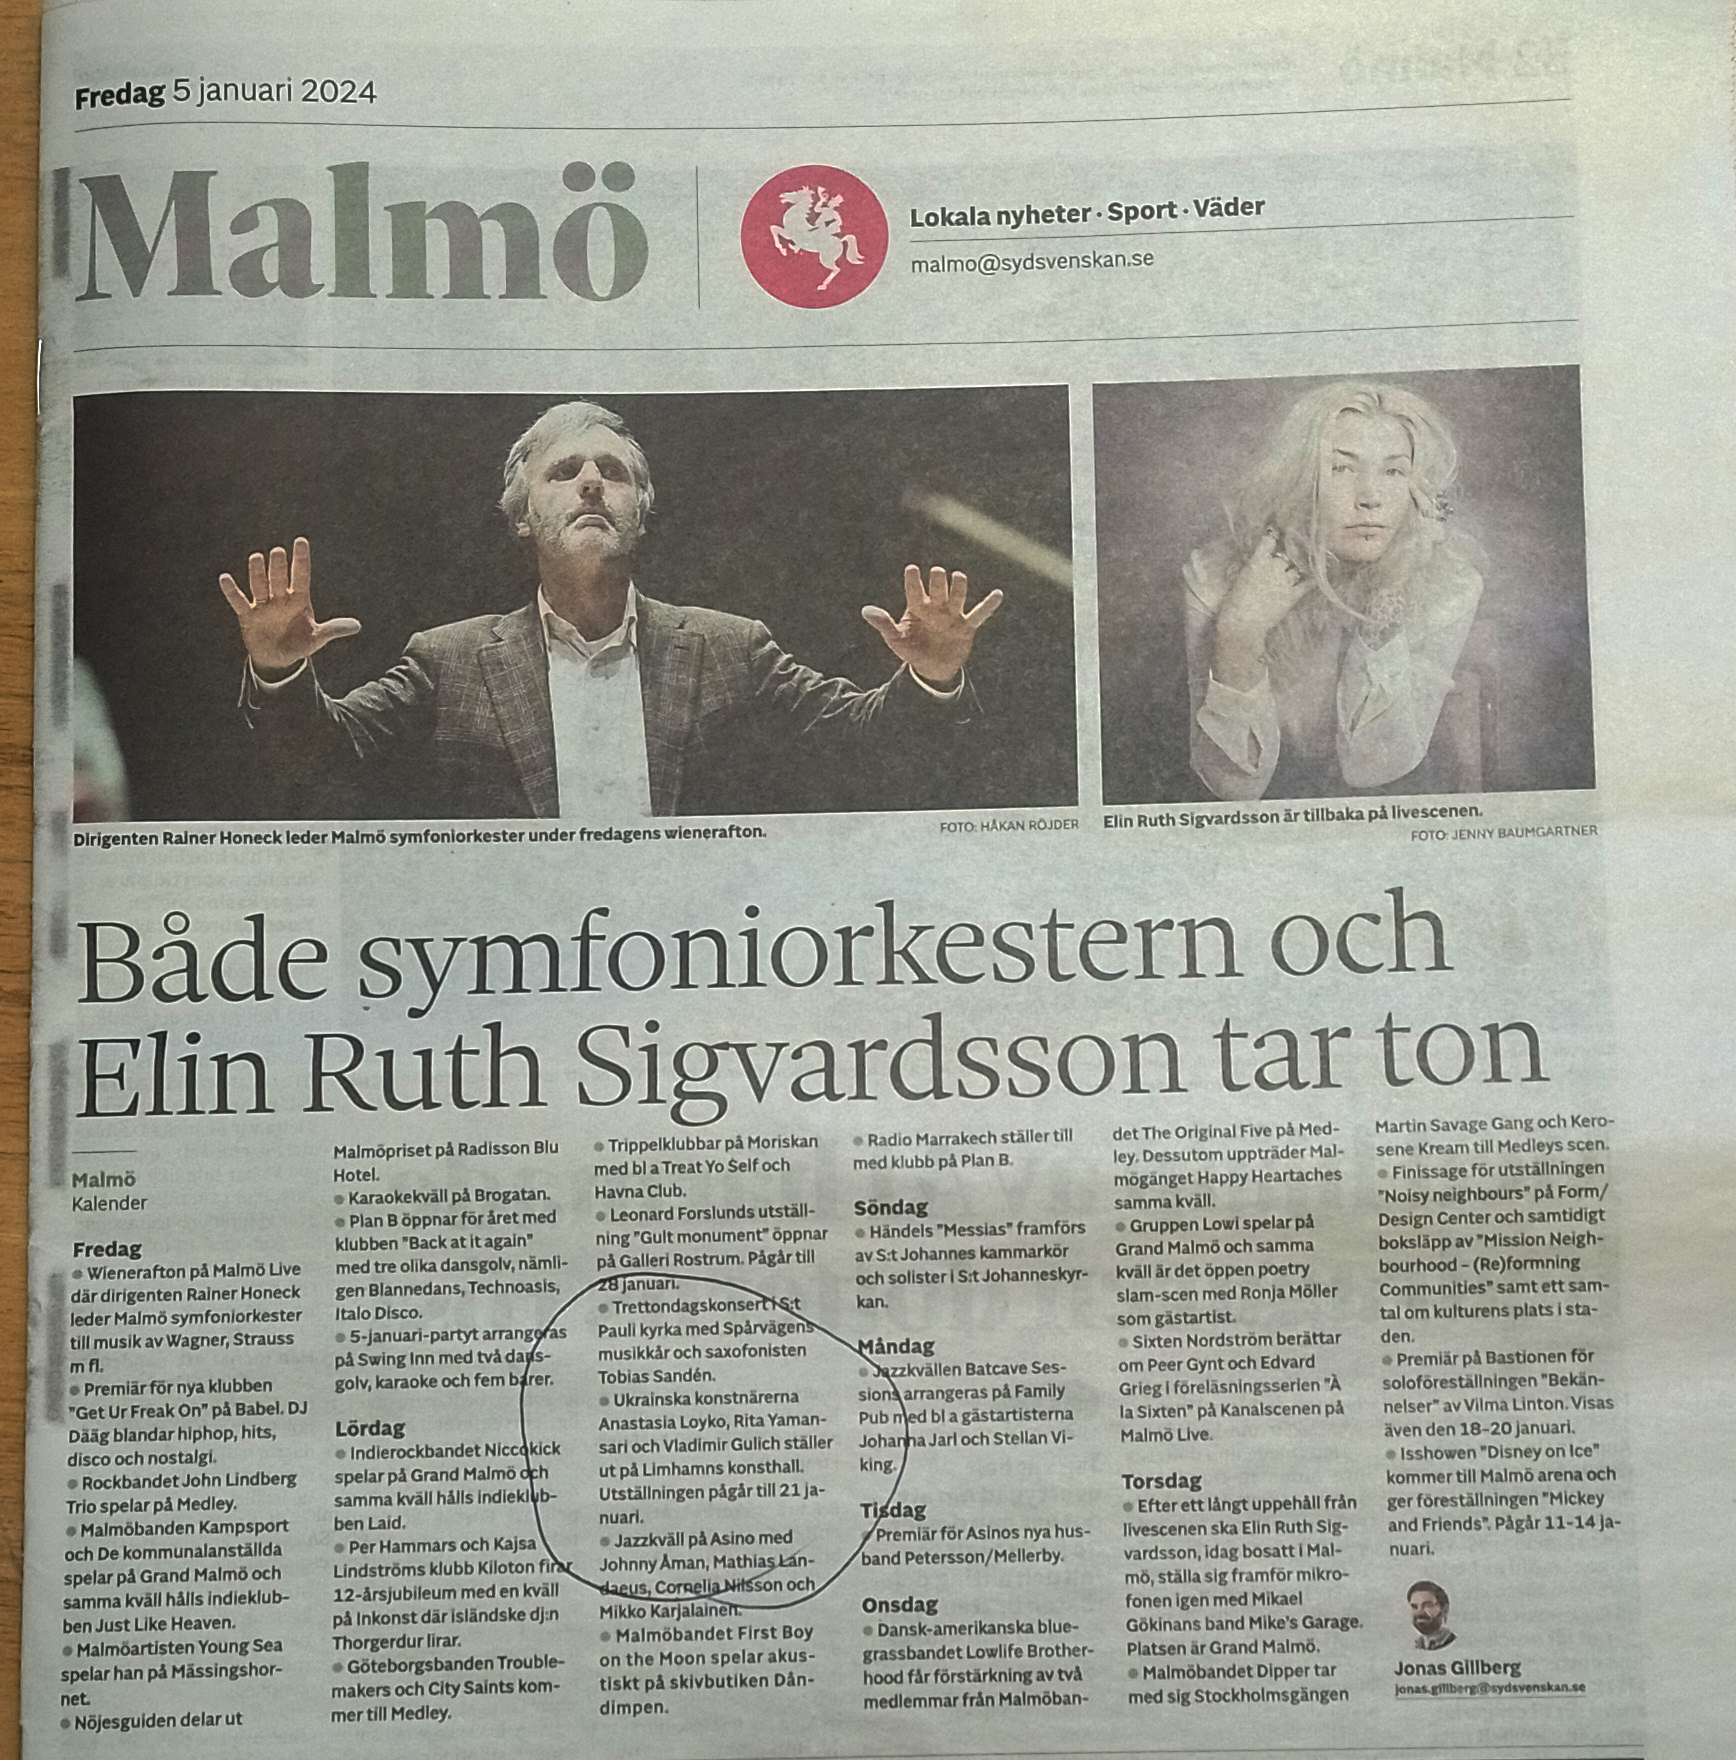 Ukrainian artist in Malmo newspapers